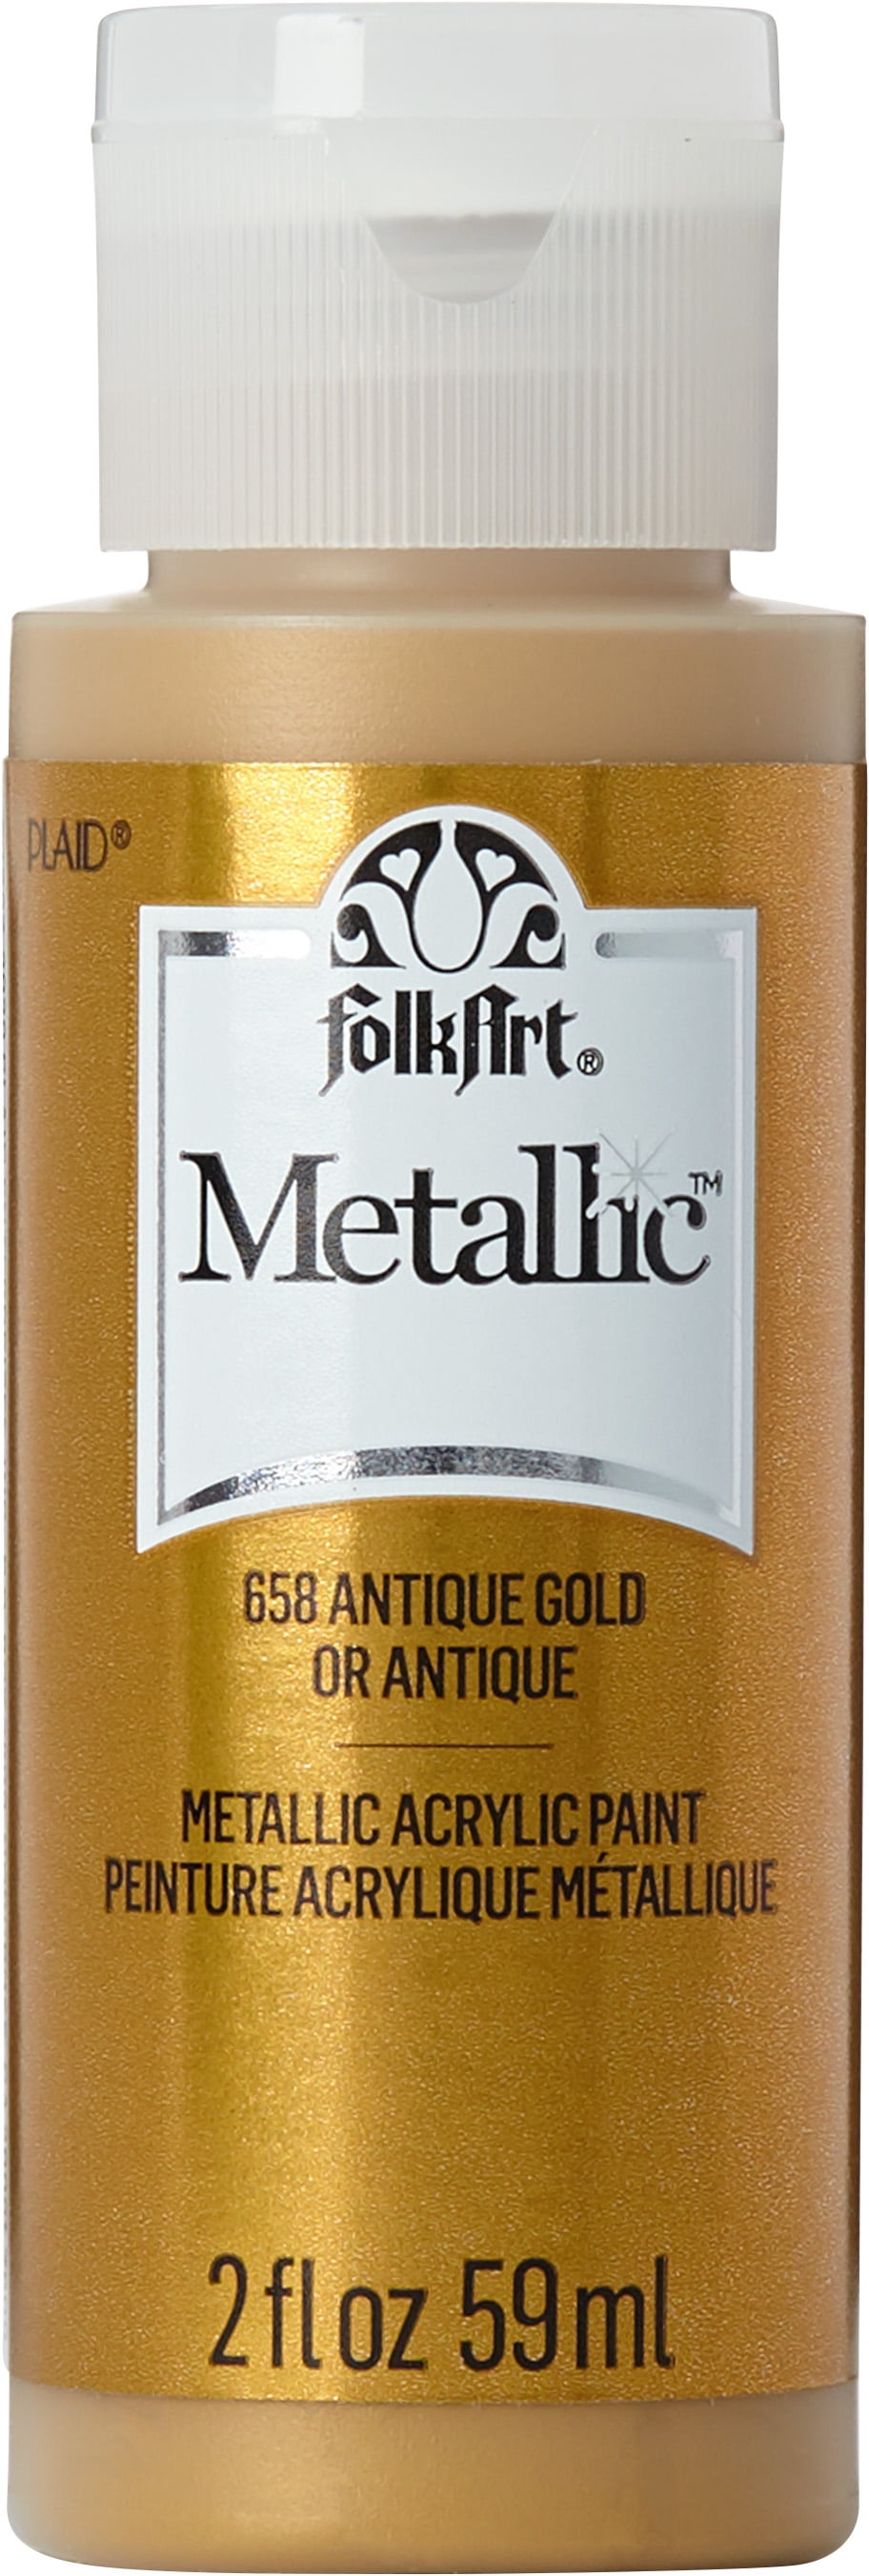 FolkArt Metallic Acrylic Craft Paint, Metallic Finish, Antique Gold, 2 fl oz